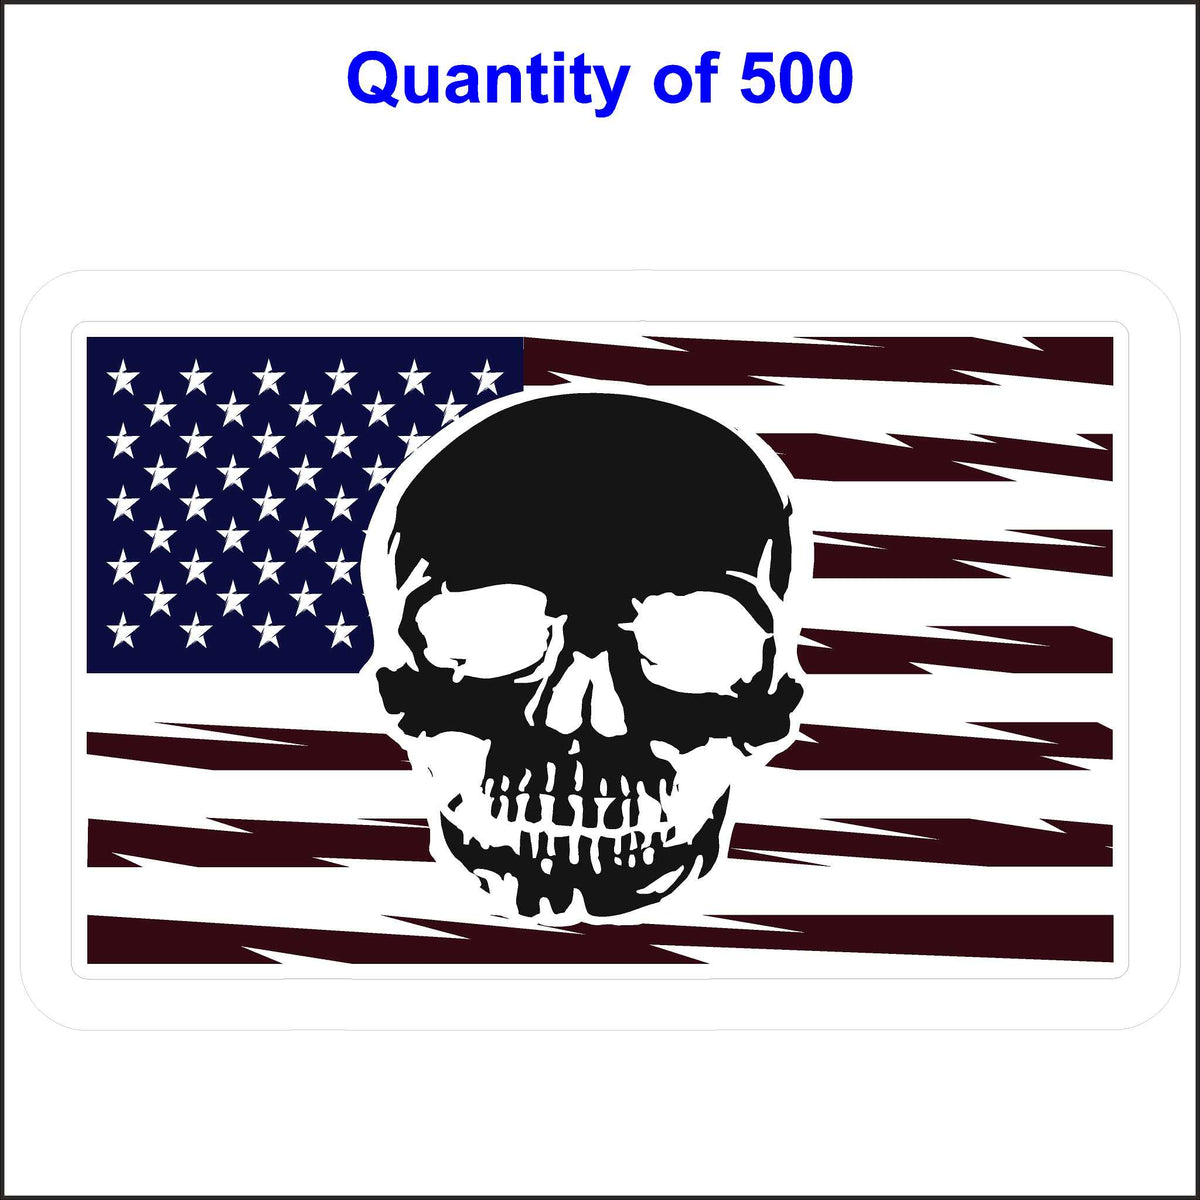 Skull on A Flag Sticker. 500 Quantity.